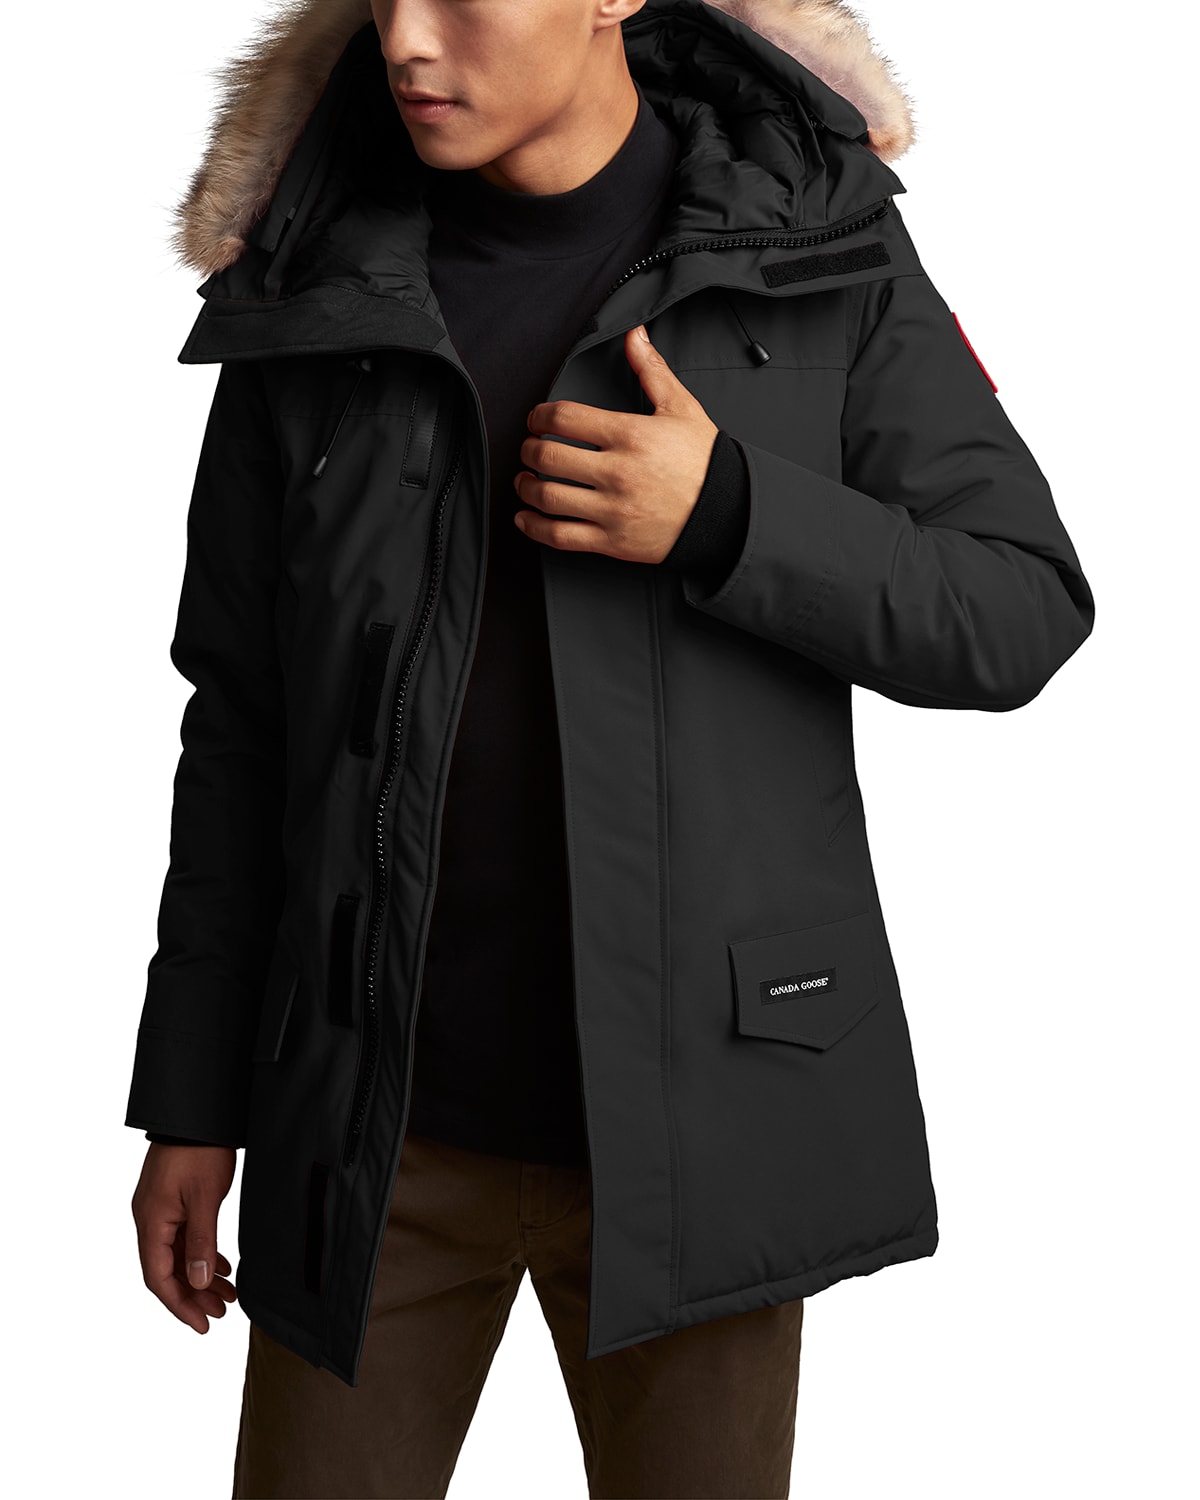 Canada Goose Men's Langford Arctic-Tech Parka Jacket with Fur Hood - Fusion Fit